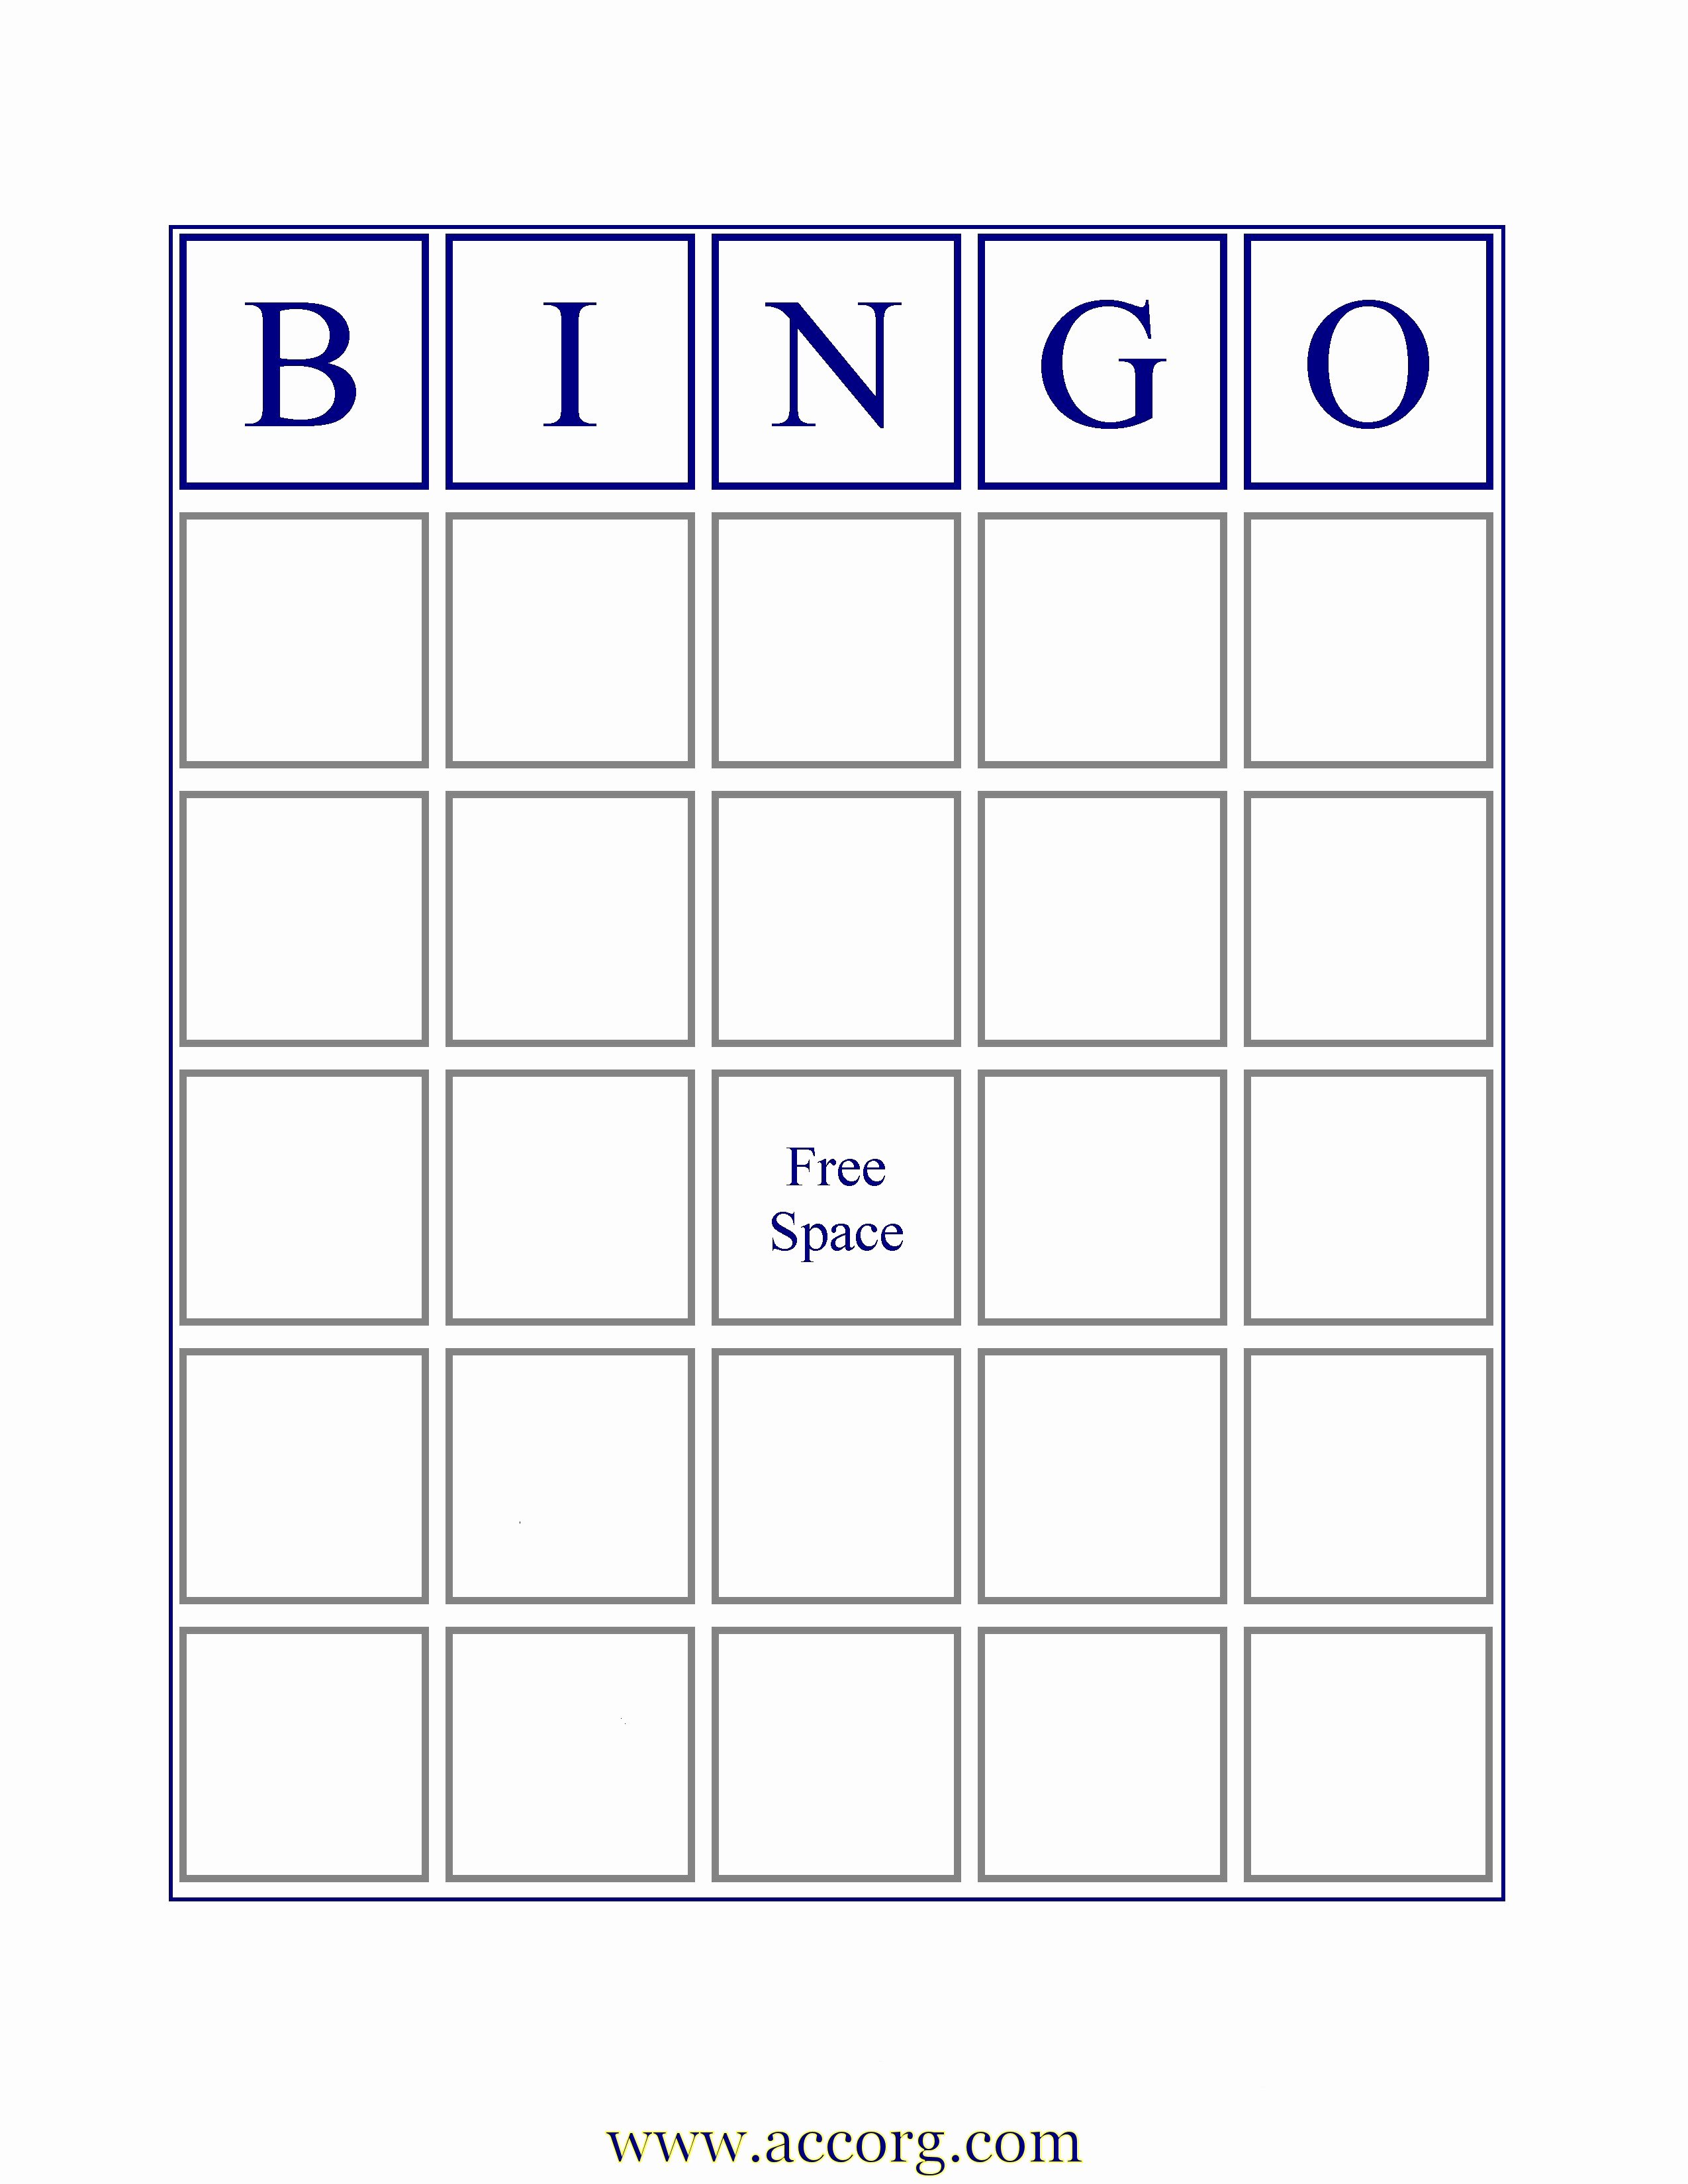 Free Blank Bingo Template Beautiful International Bingo association Downloads